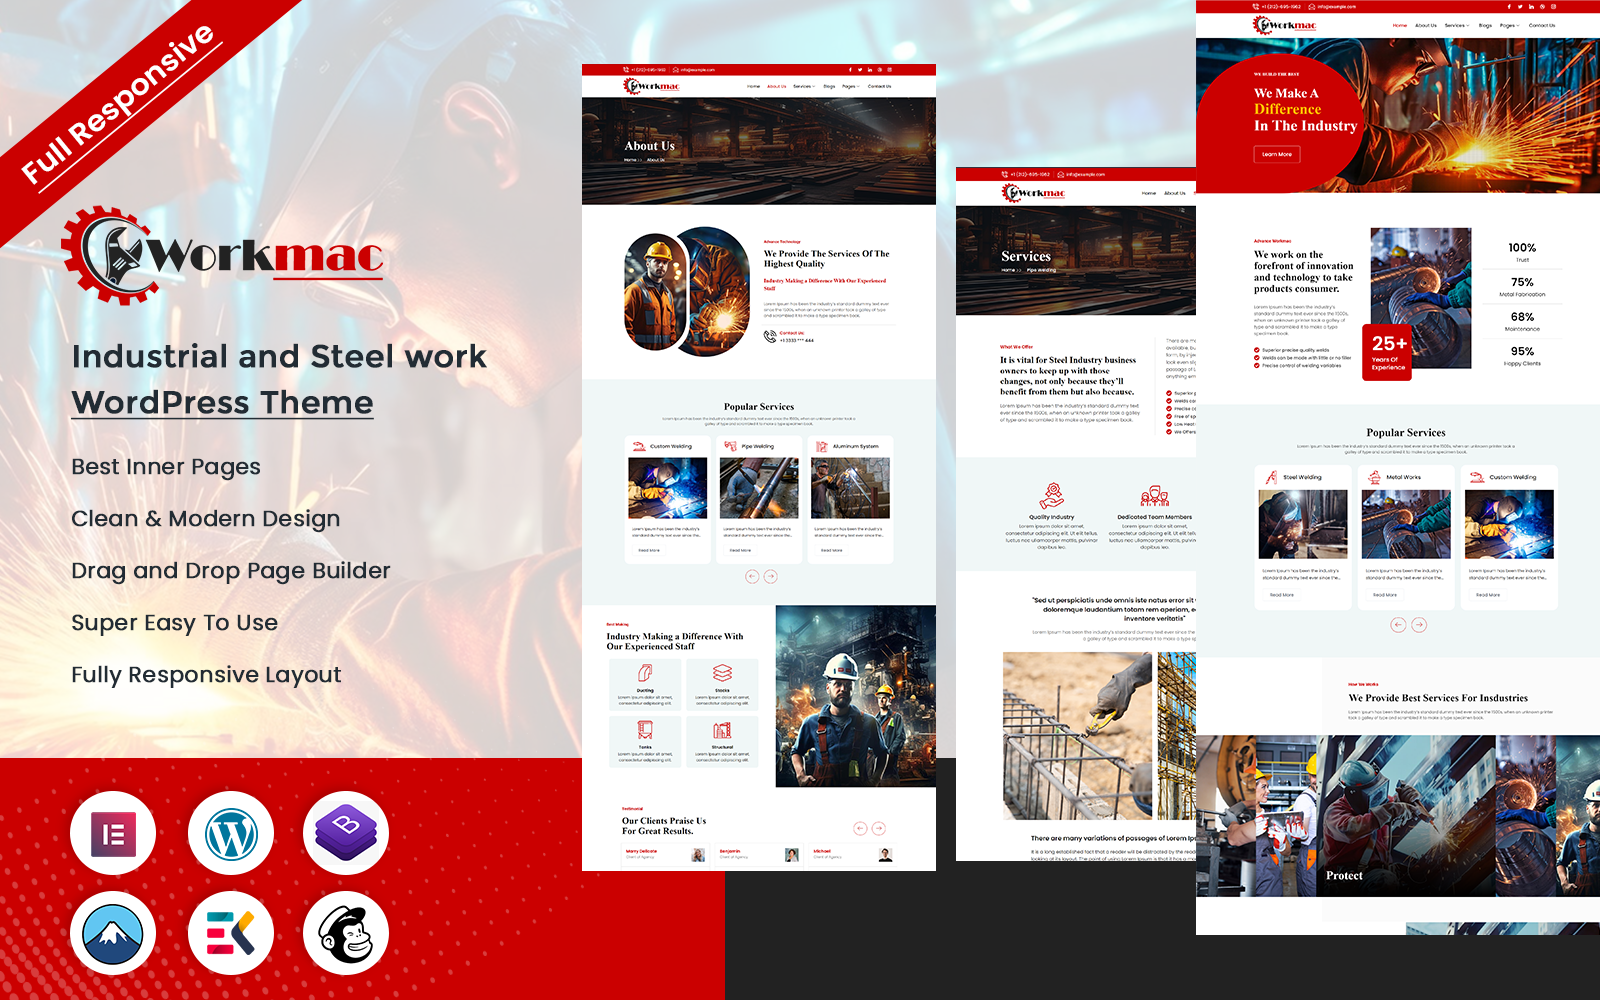 Workmac - Industrial and Steel work WordPress Theme